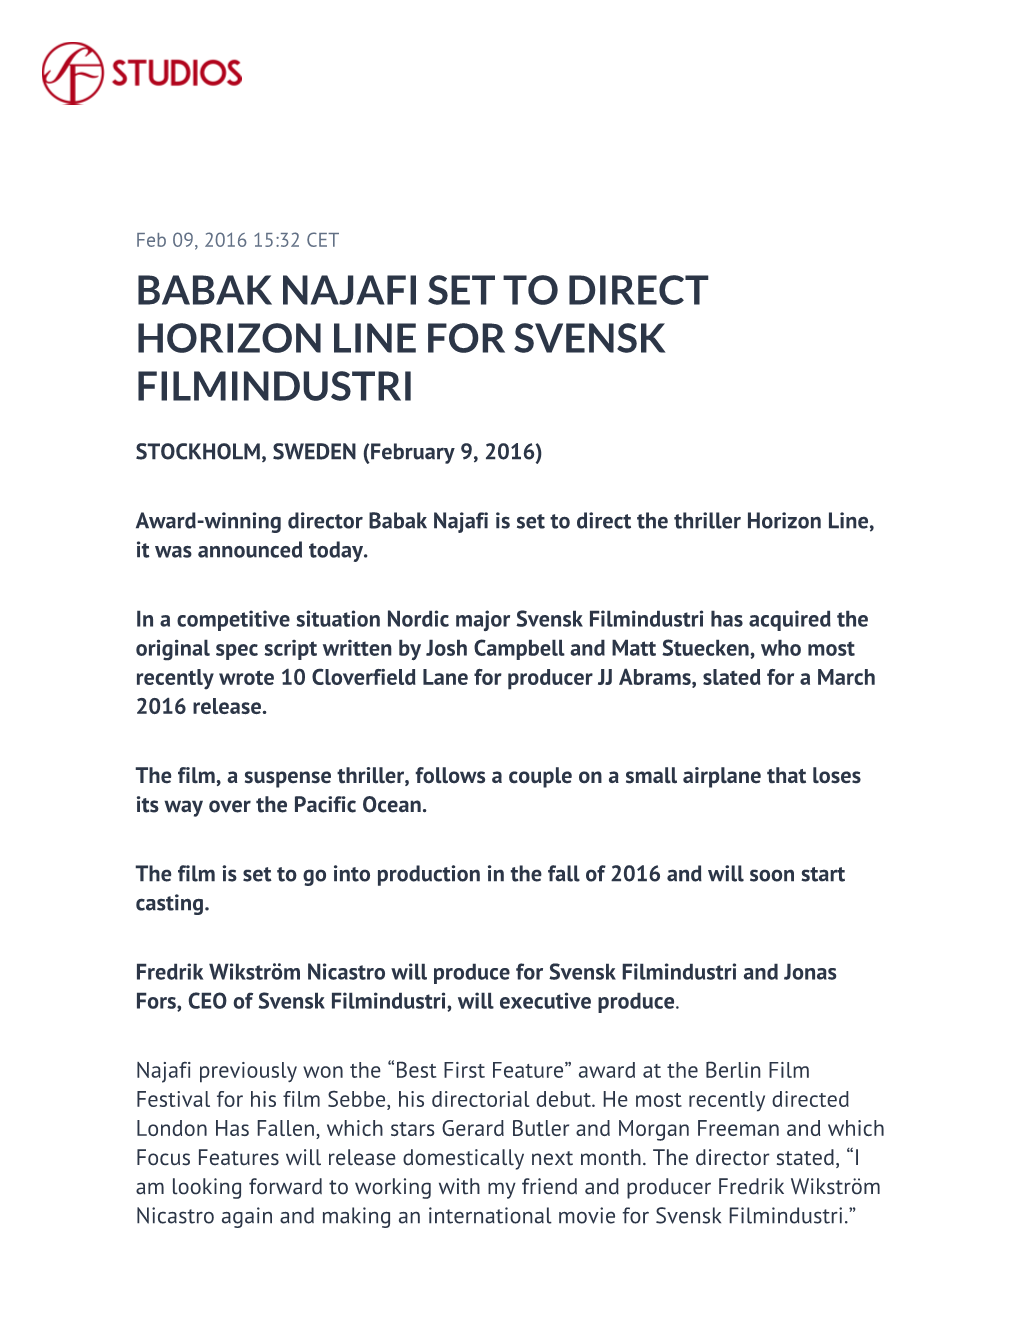 Babak Najafi Set to Direct Horizon Line for Svensk Filmindustri